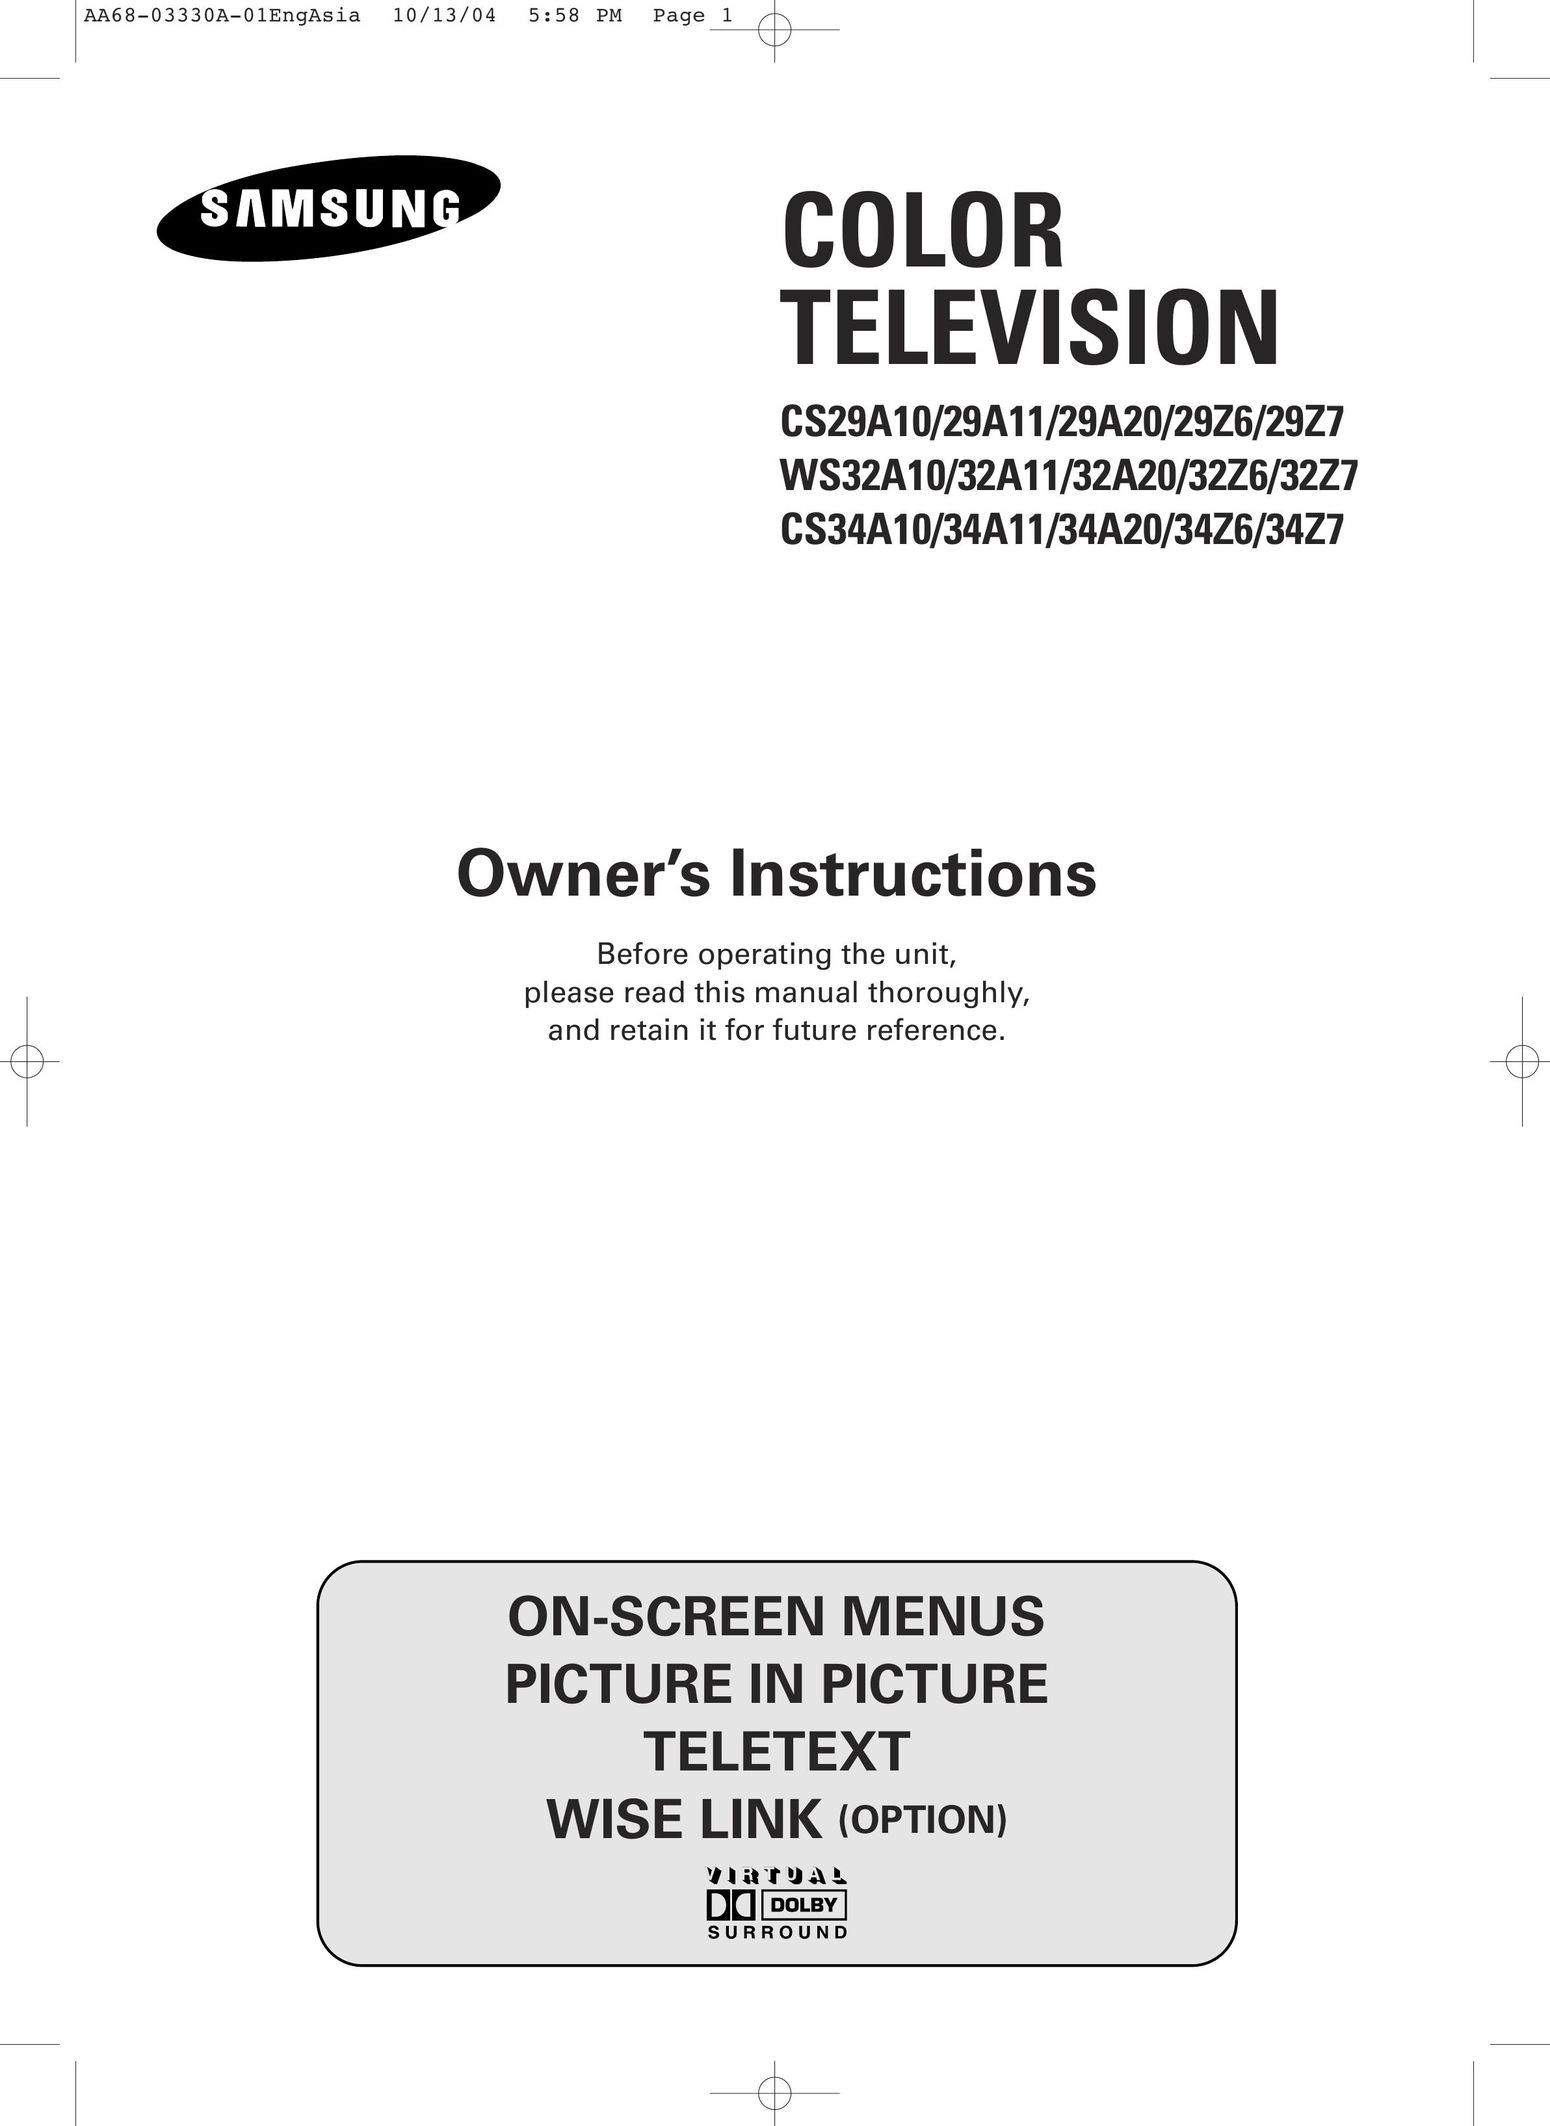 Samsung 32A11 CRT Television User Manual